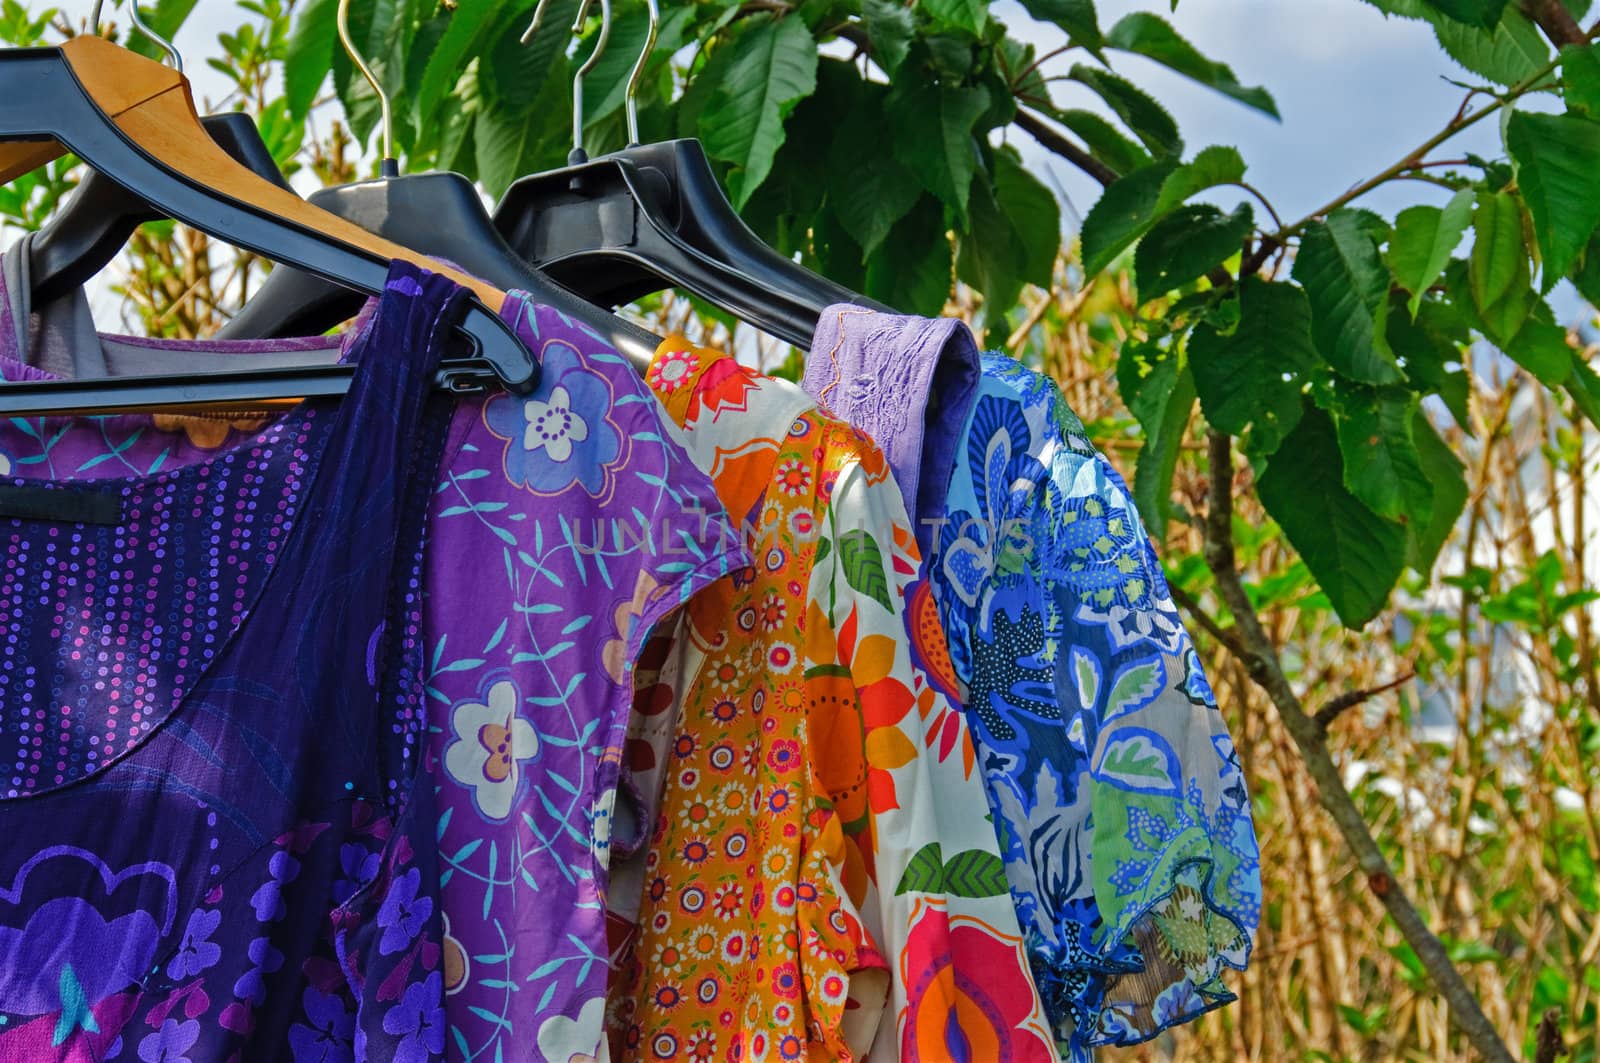 Summer dresses hanging in a garden